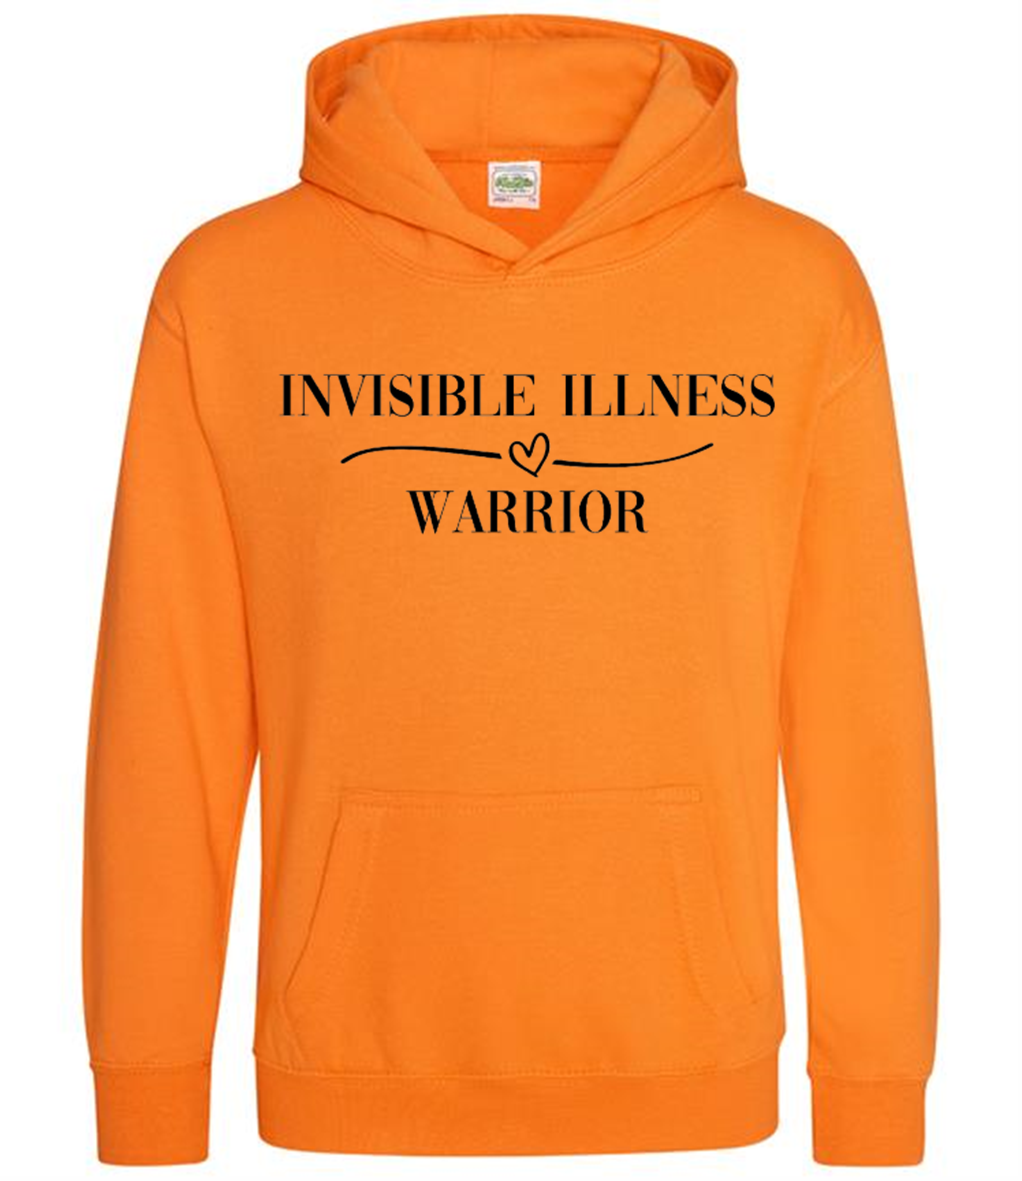 Invisible Illness Warrior Kids Hoodie